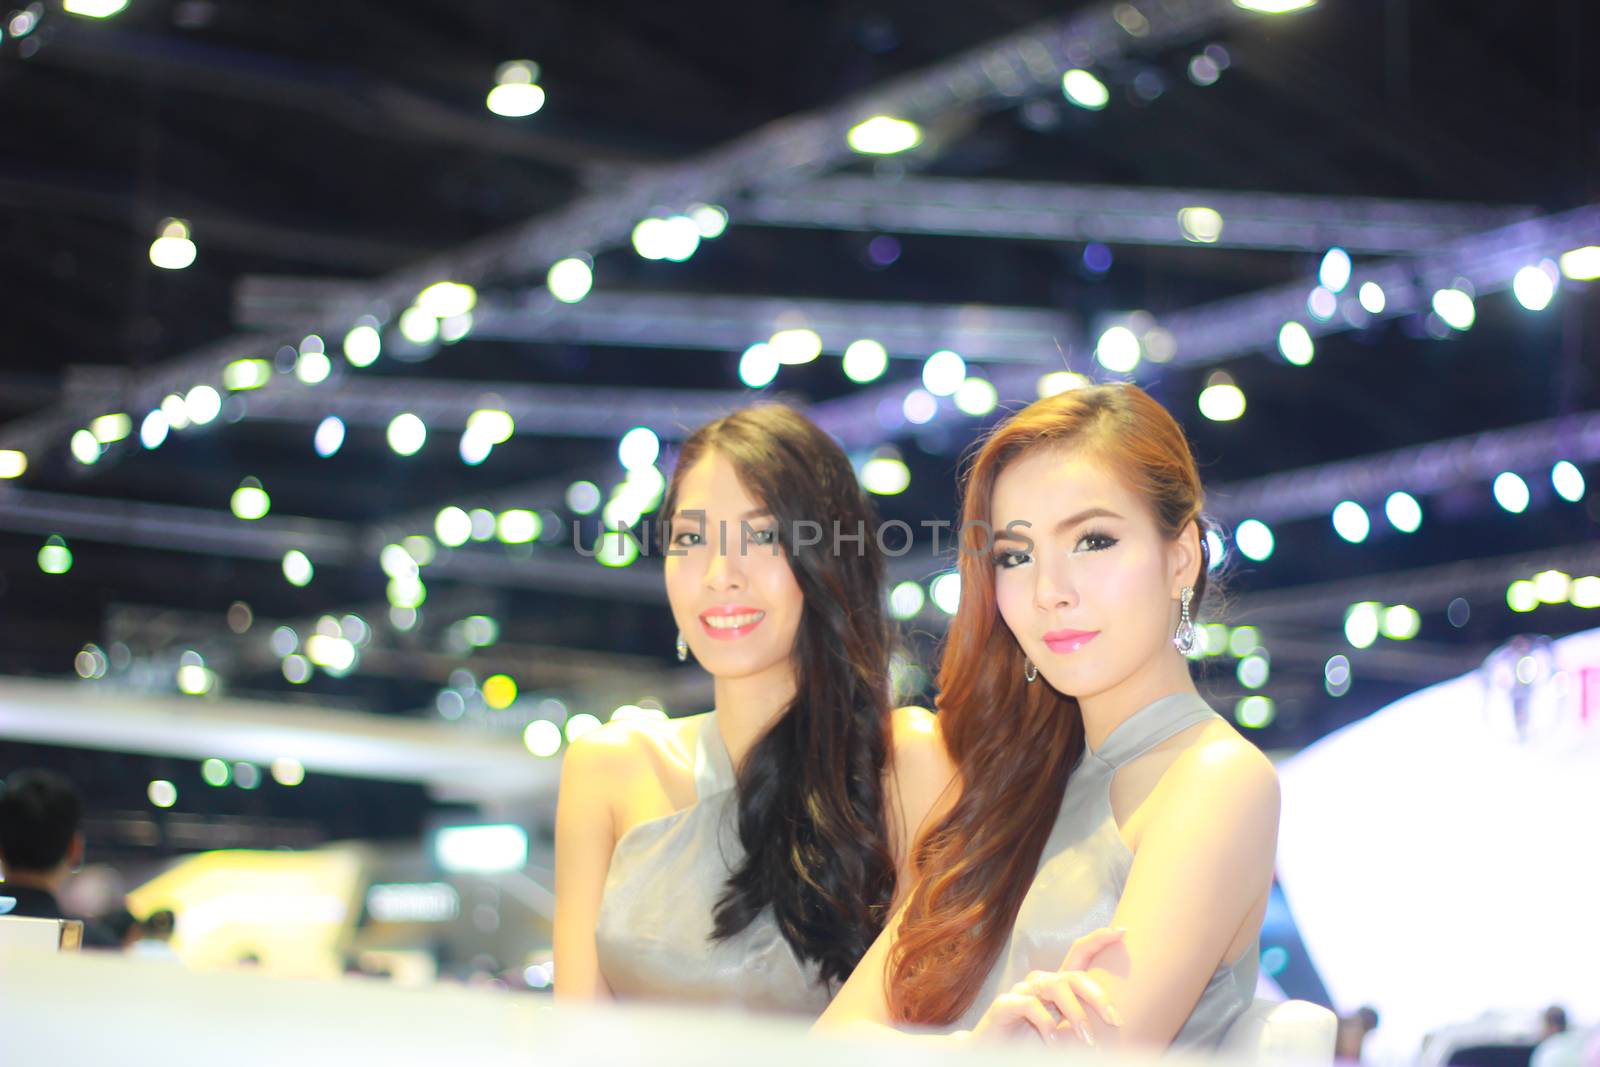 An Unidentified female presenter pose in Bangkok International Motor Show by redthirteen